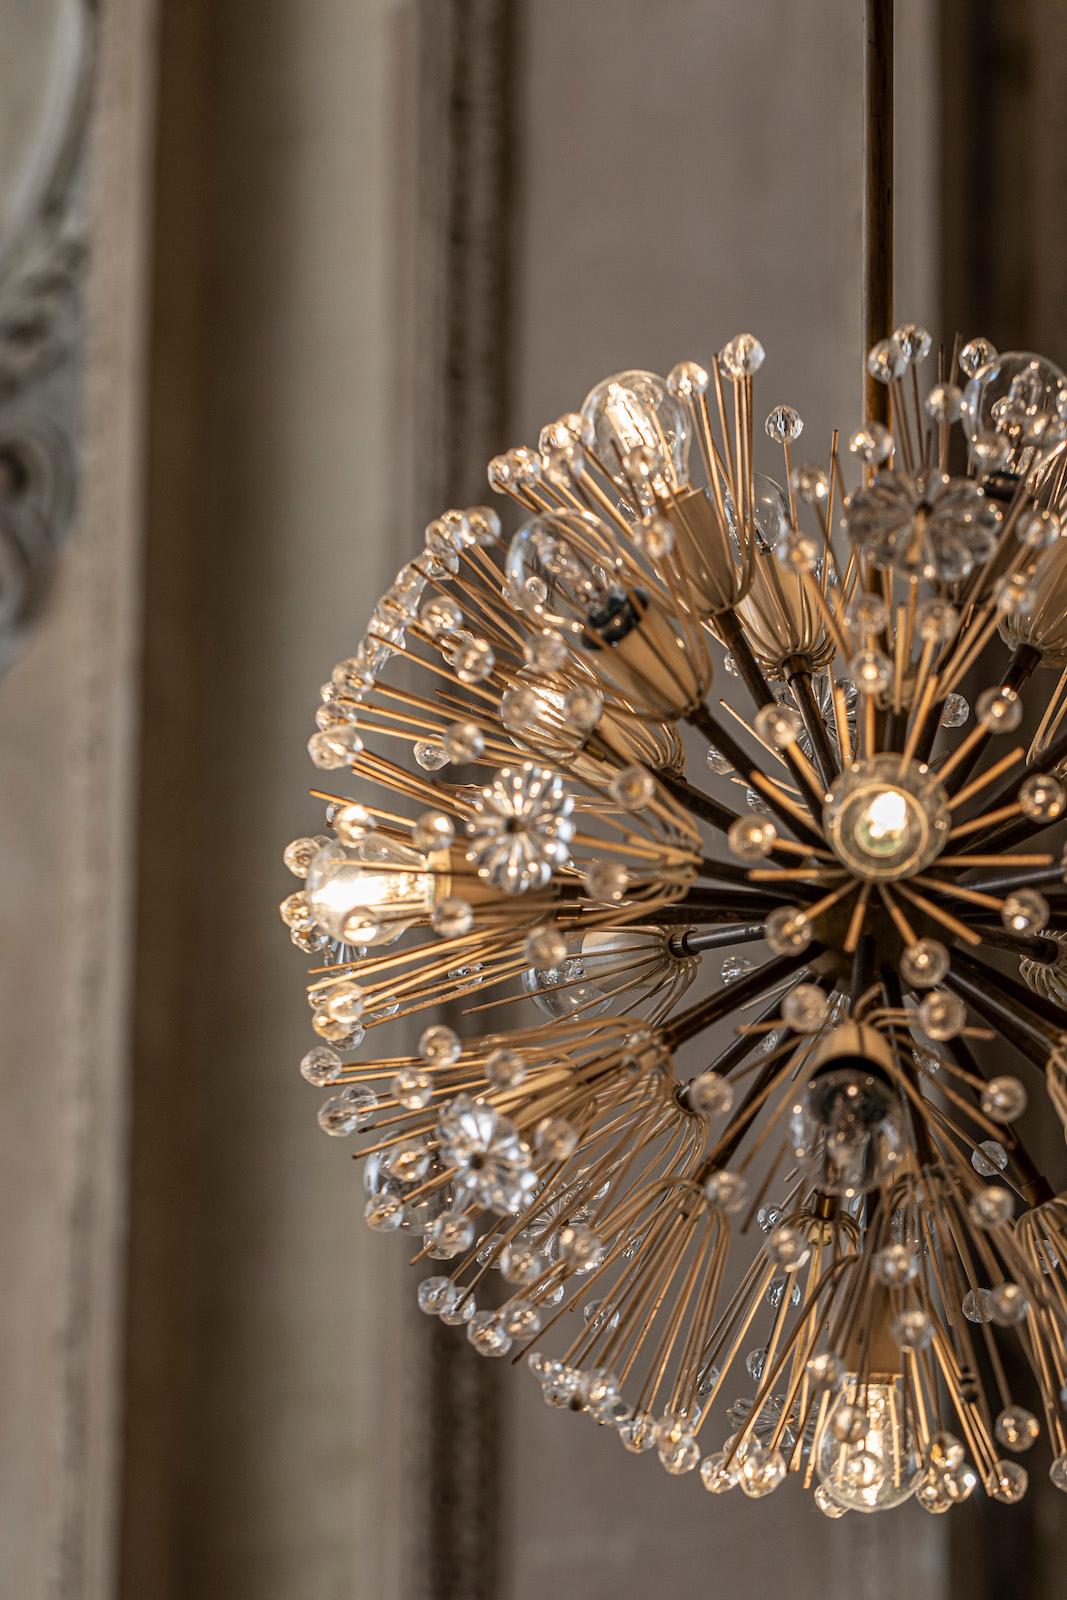 Elegant 18 lights Sputnik chandelier by Emil Stejnar.
Brass and glass charming pendant.
Very good original condition.